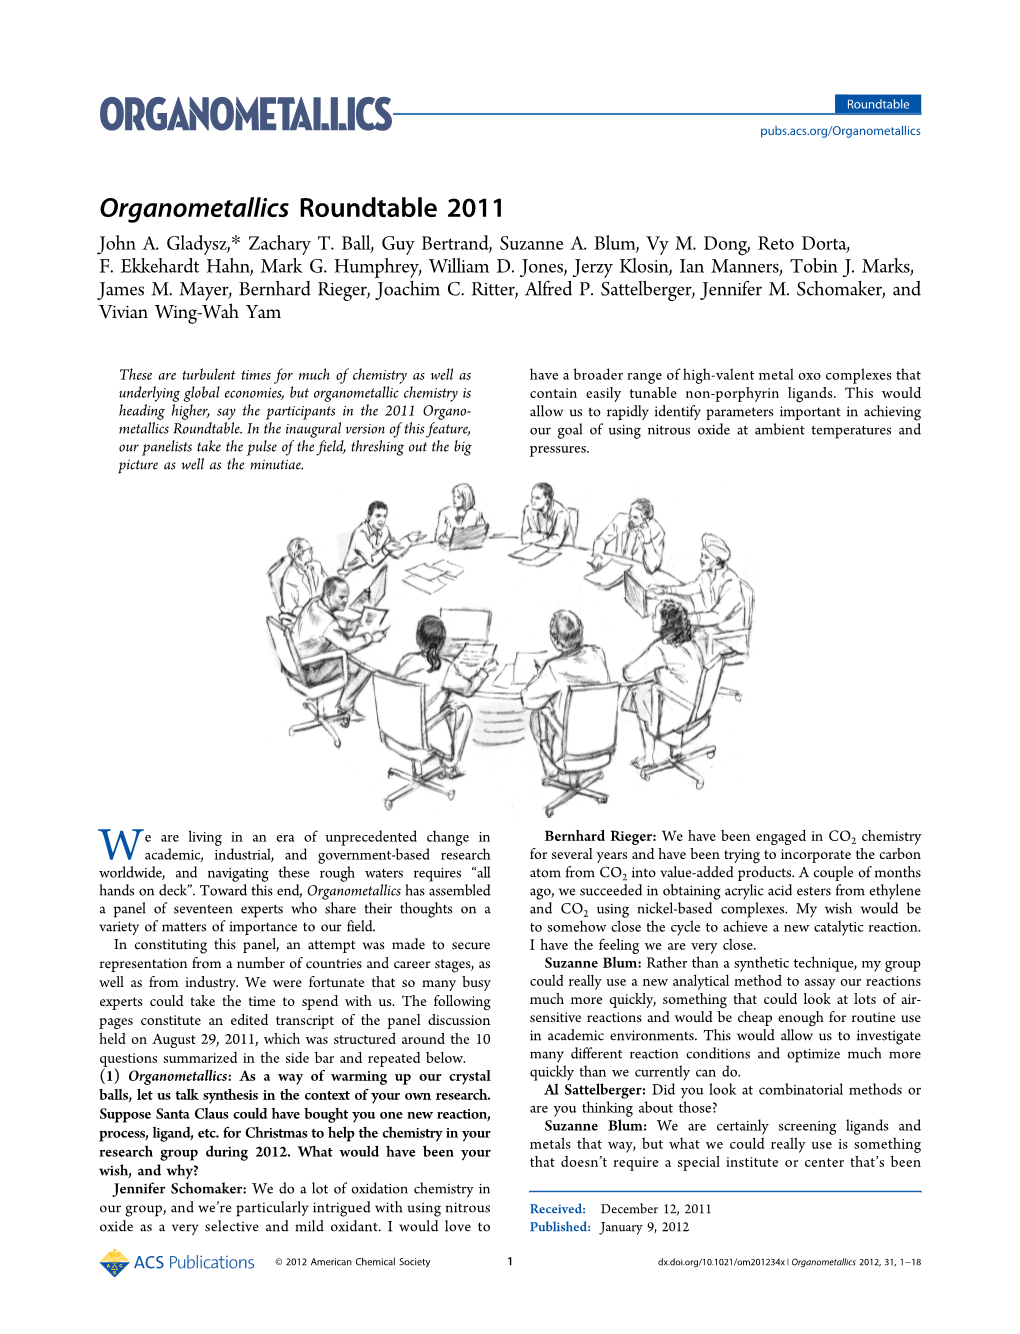 Organometallics Roundtable 2011 John A